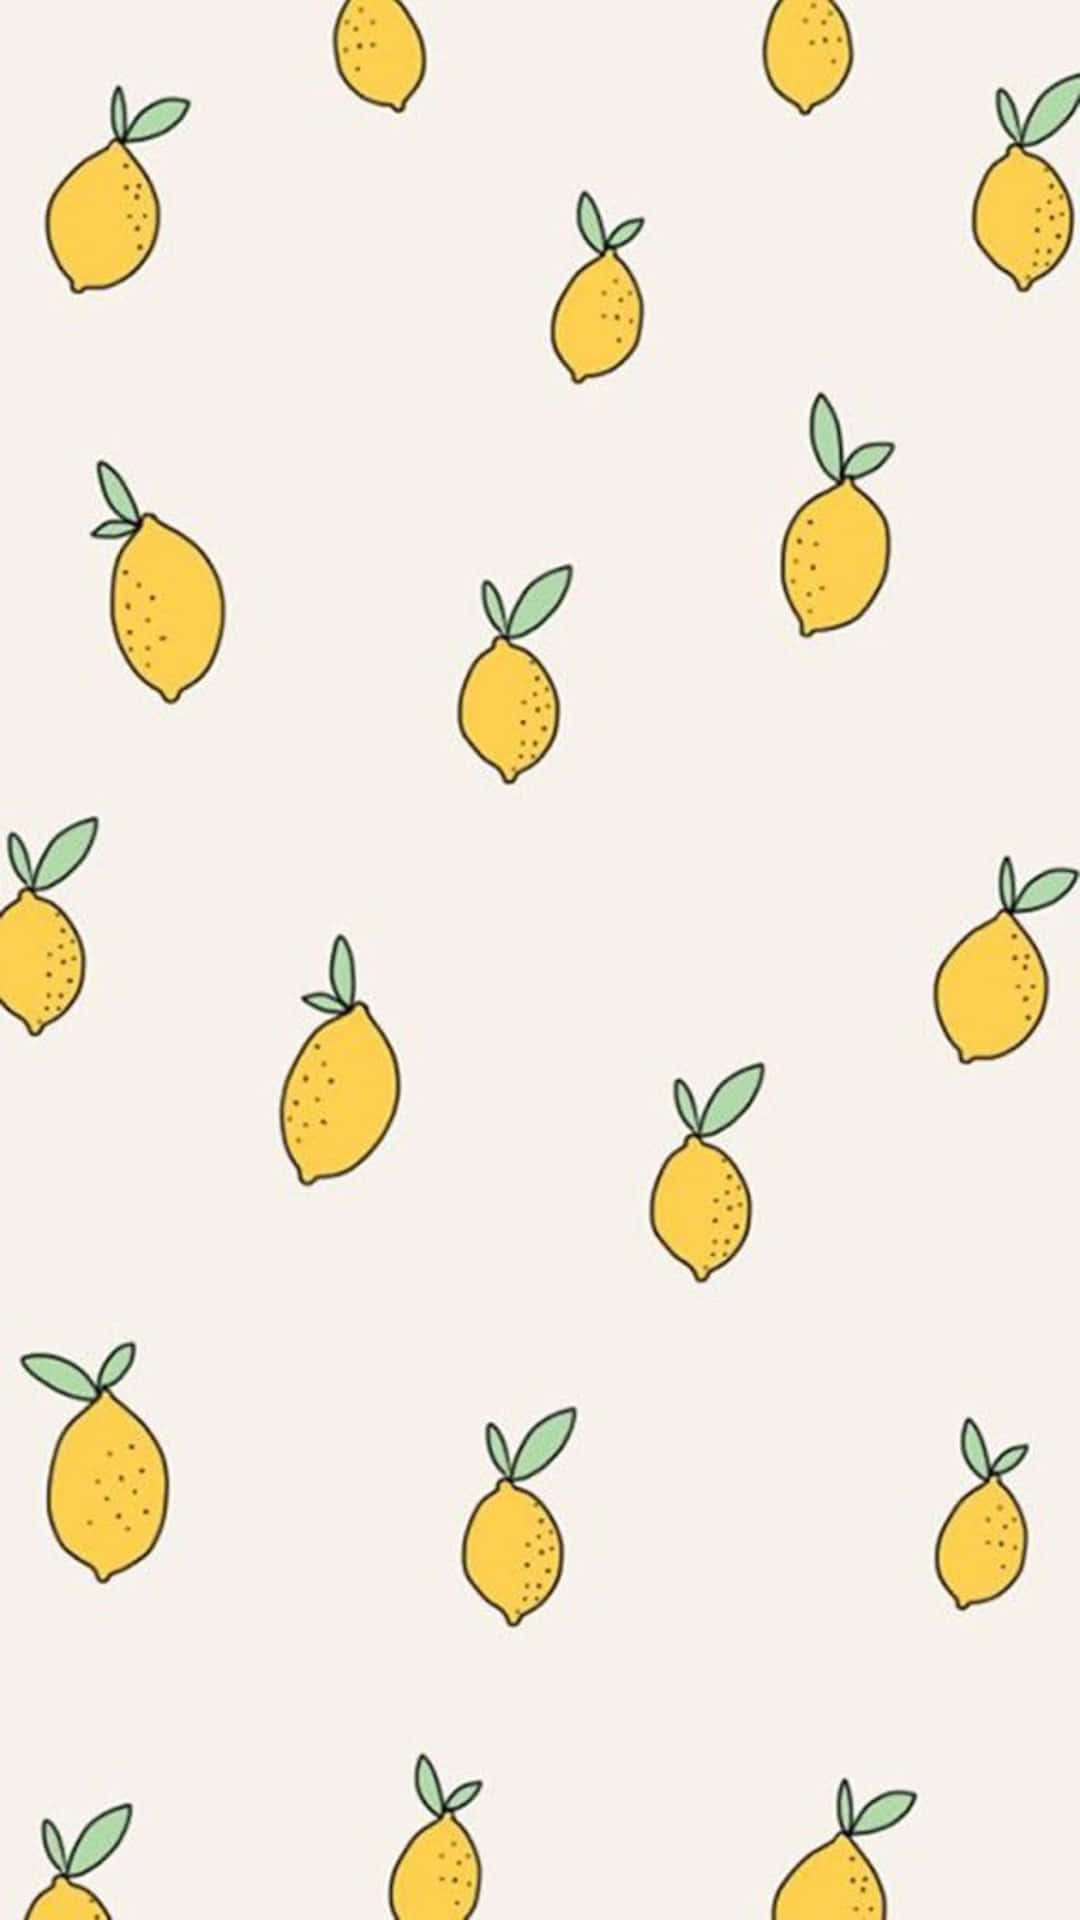 A pattern of lemons on white background - Lemon